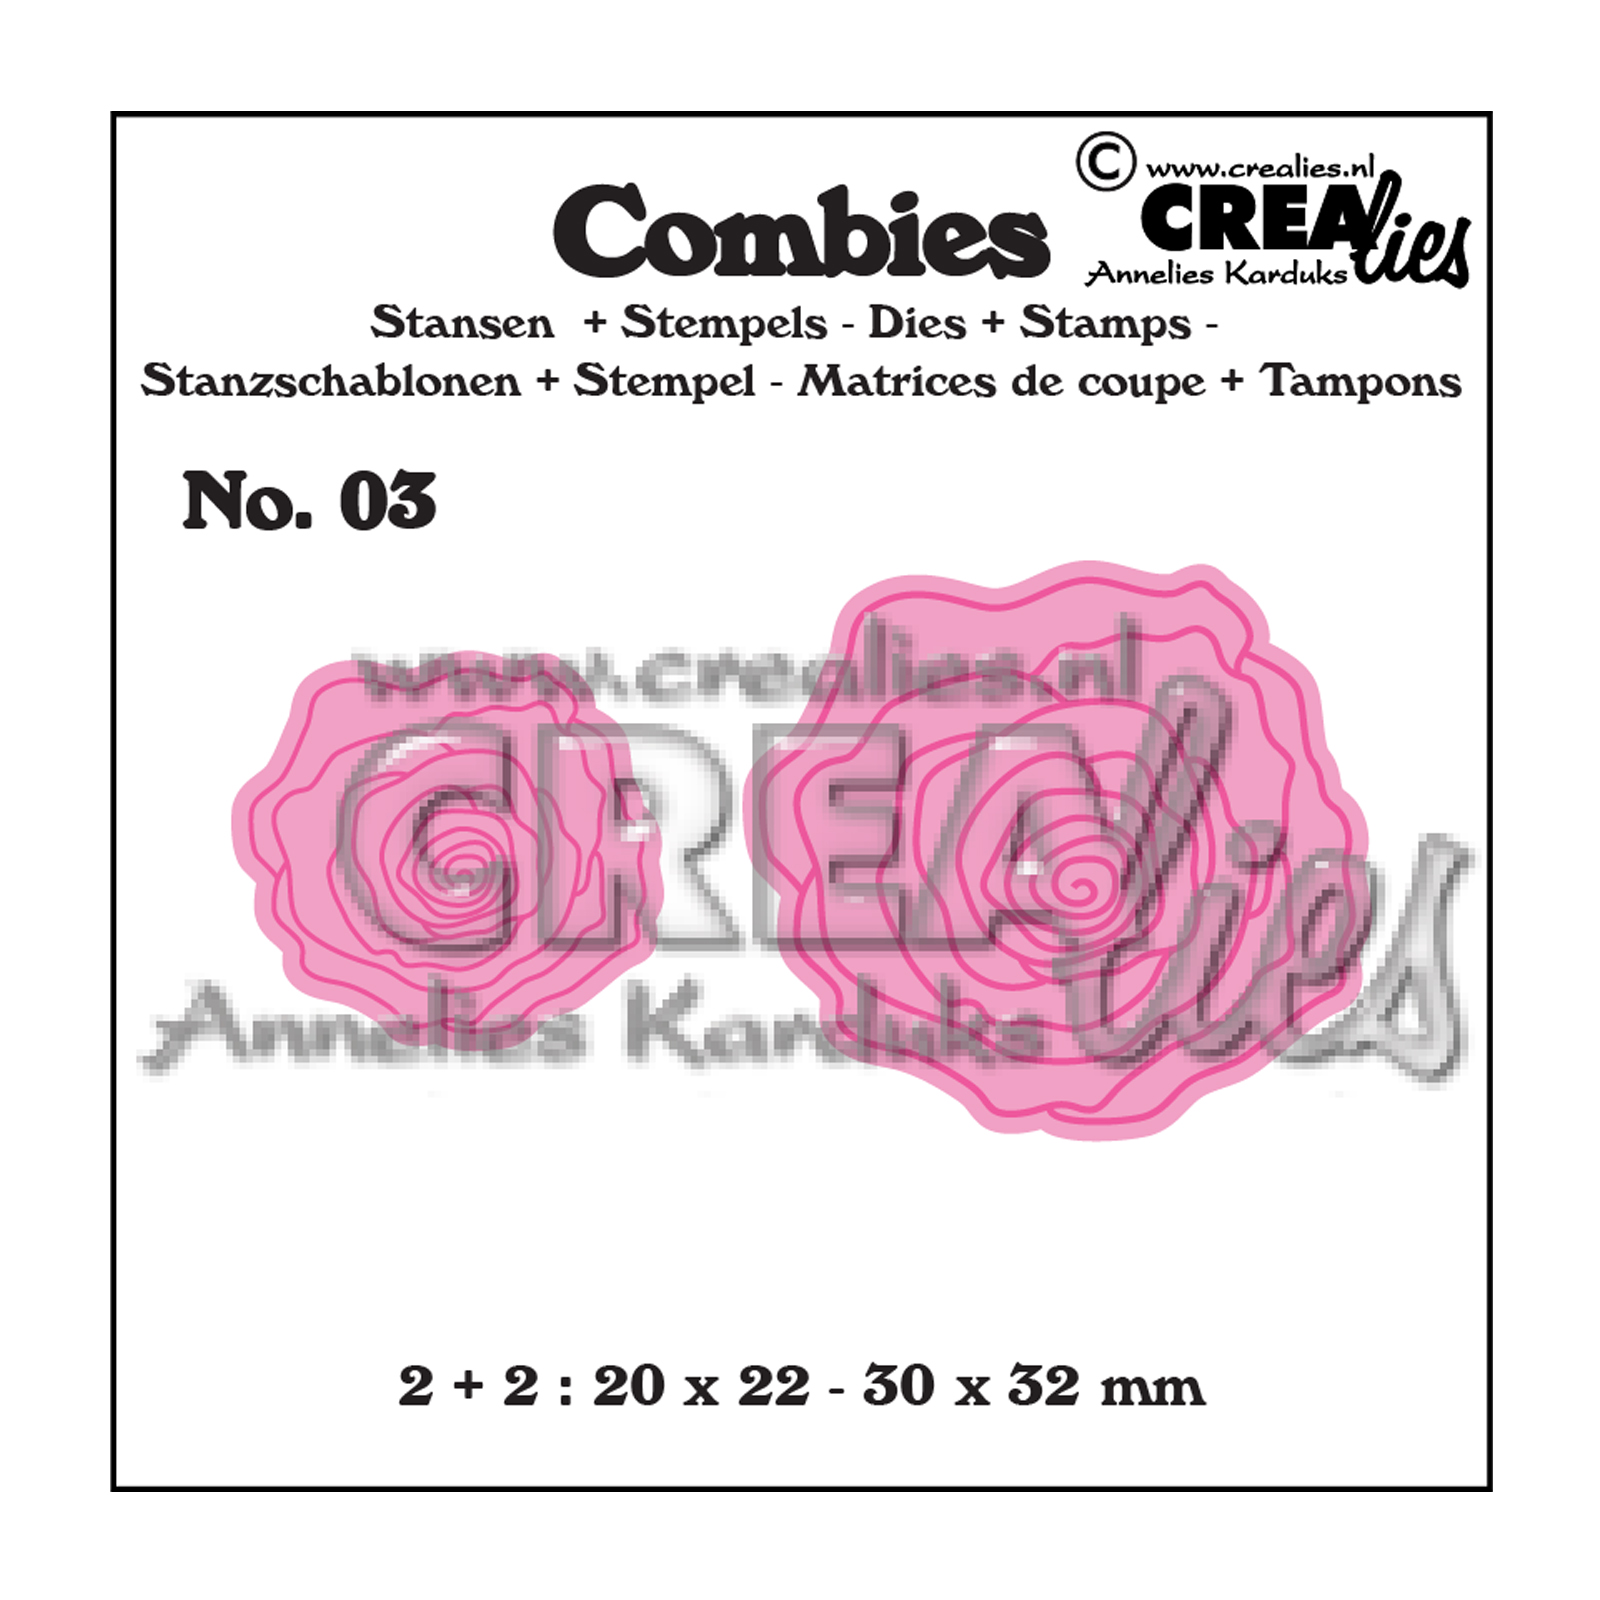 Crealies • Combies snijmal & stempel no.03 Rozen klein